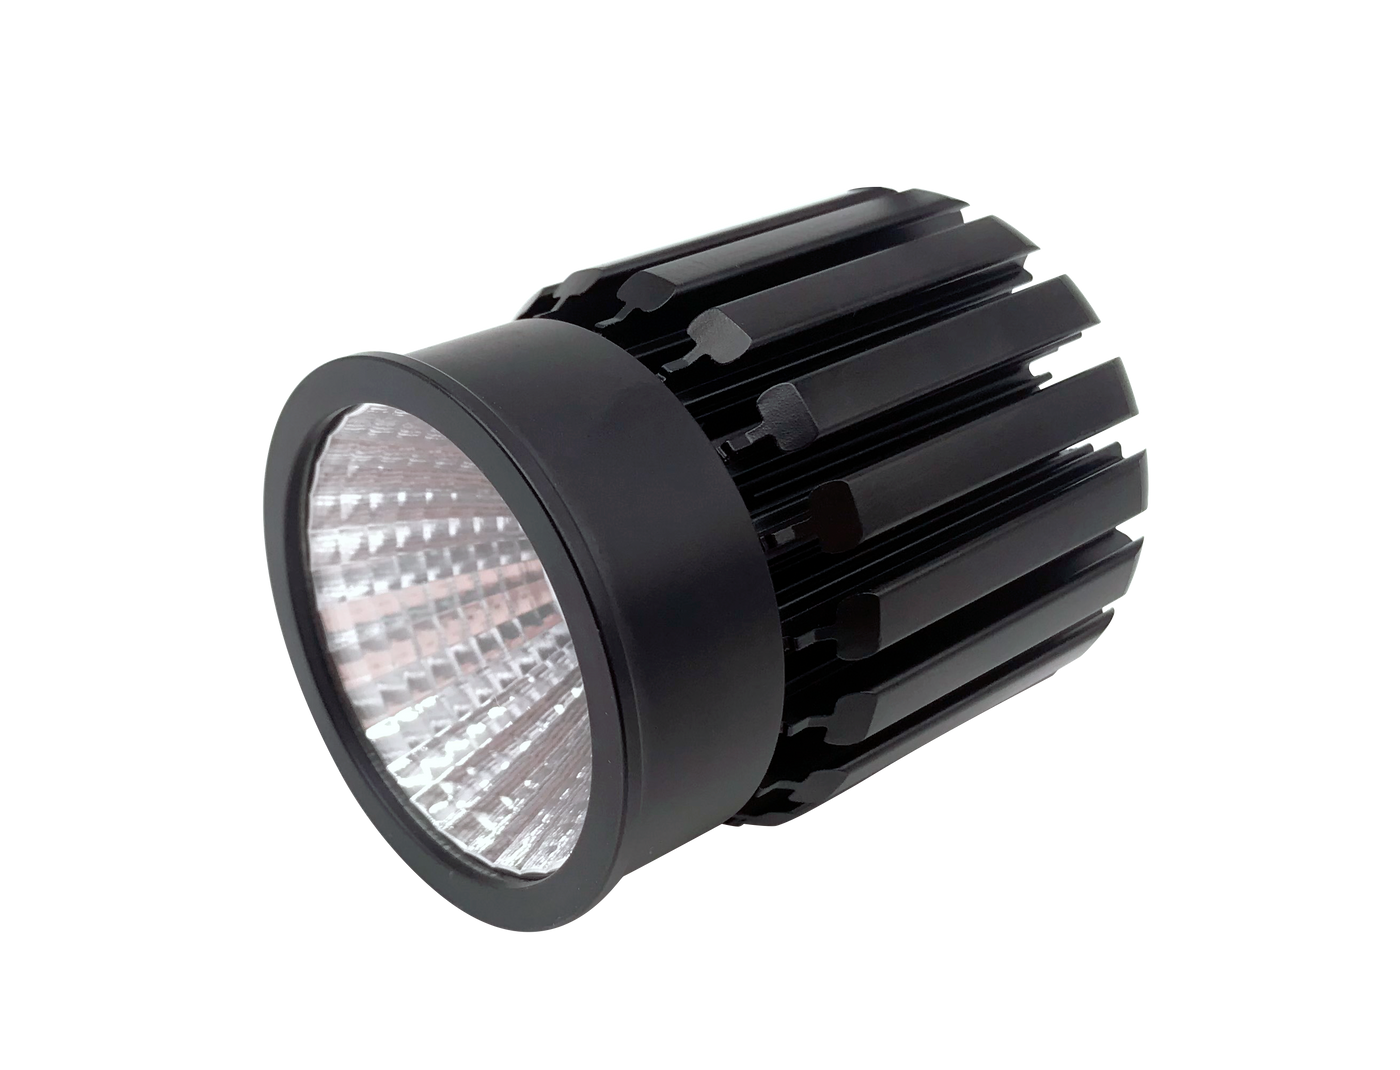 3" LED Architectural Winged Recessed Light, Slot Trim, 700 Lumens, 10 Watts, 120V, CCT Available 2700K, 3000K, 3500K, 4000K, or 5000K, Black or White